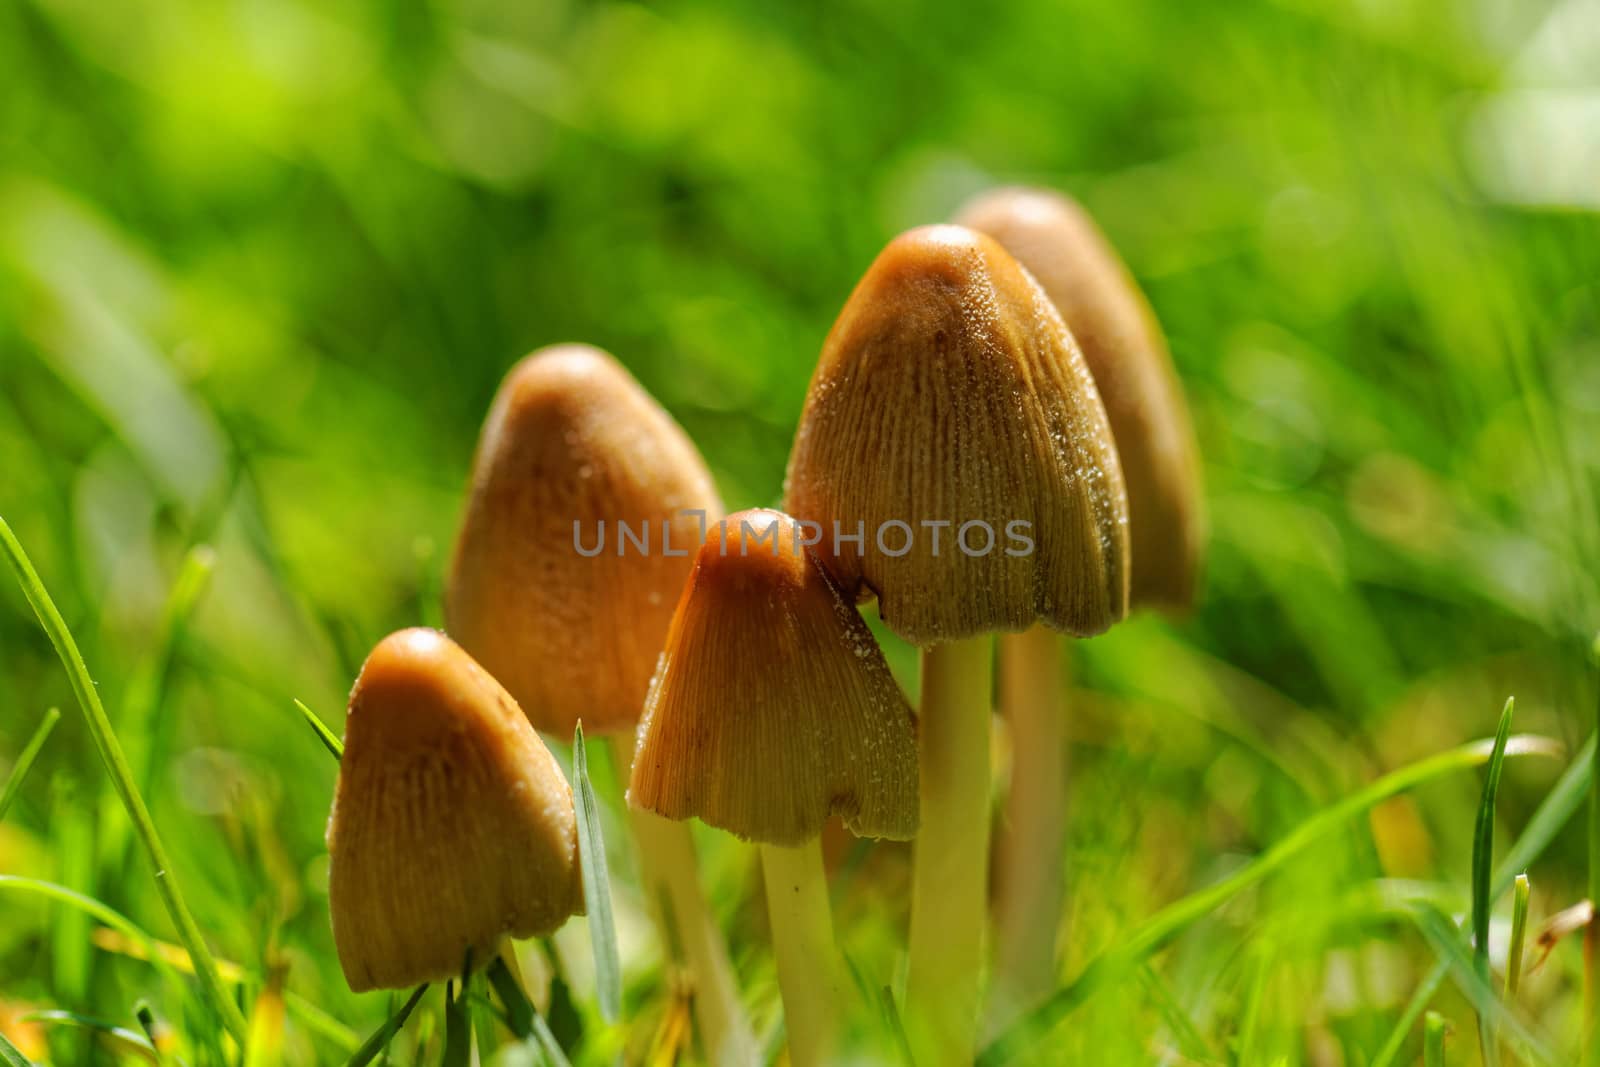 Mushroom growing in the grass